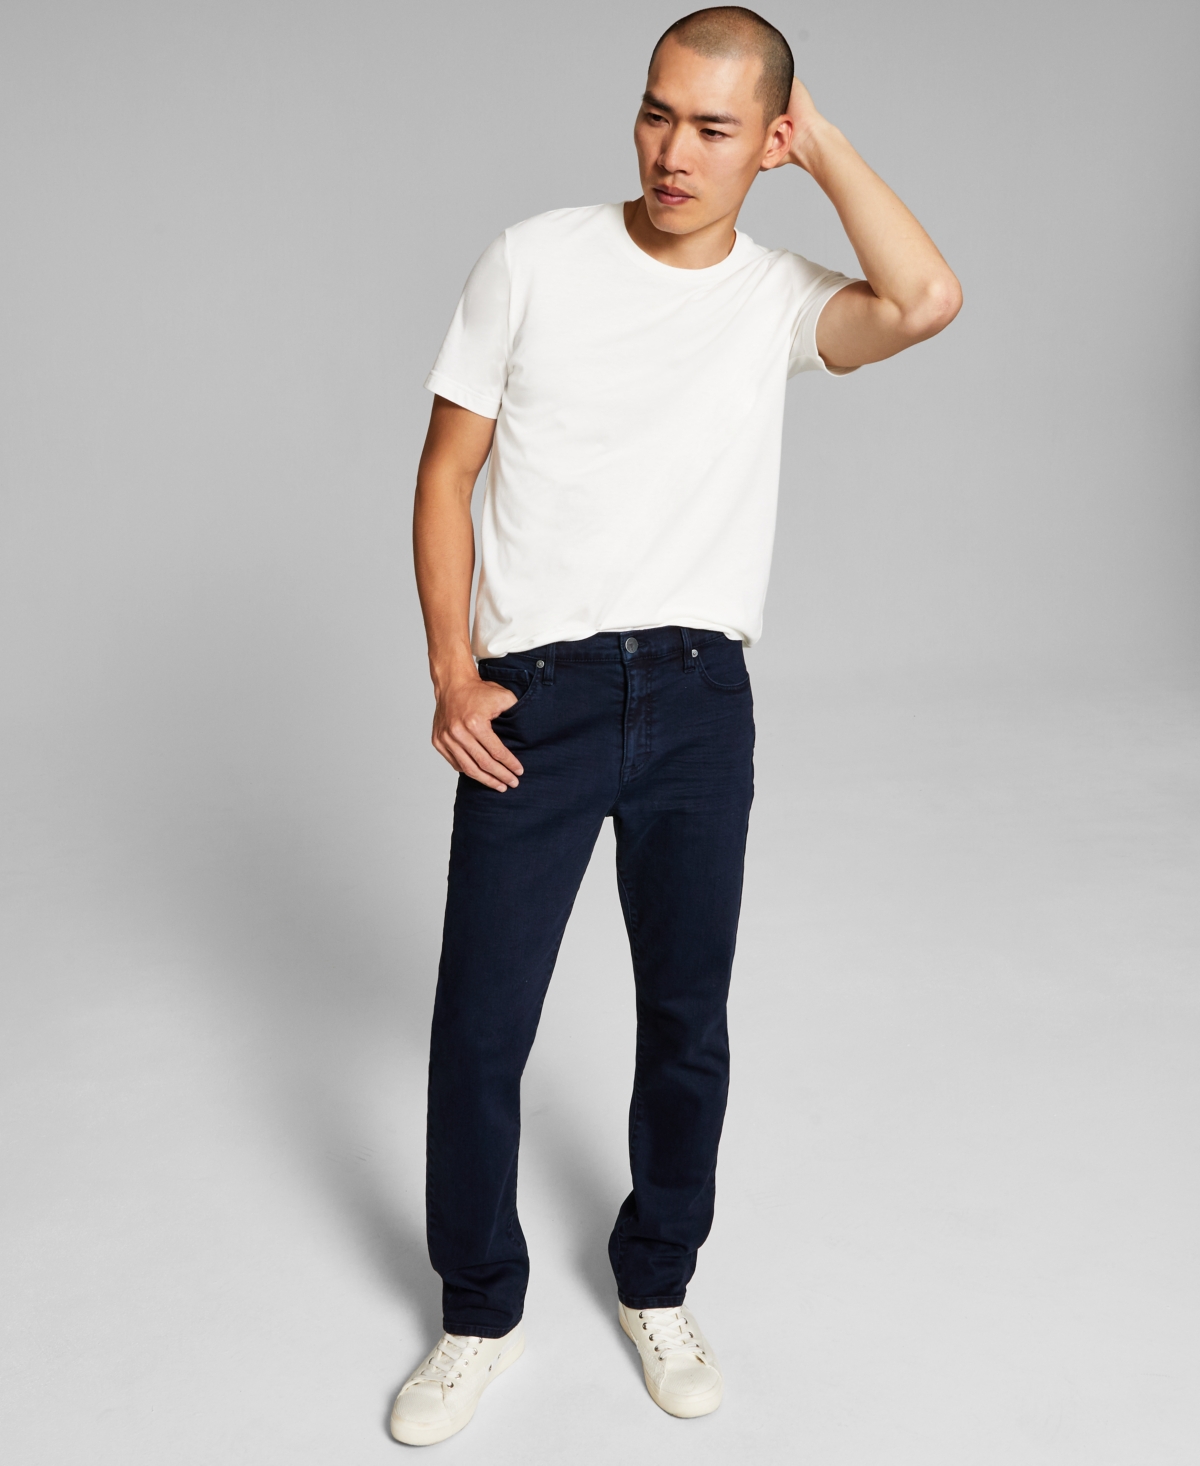 Men's Straight-Fit Stretch Jeans - Overdye Dark Blue Wash